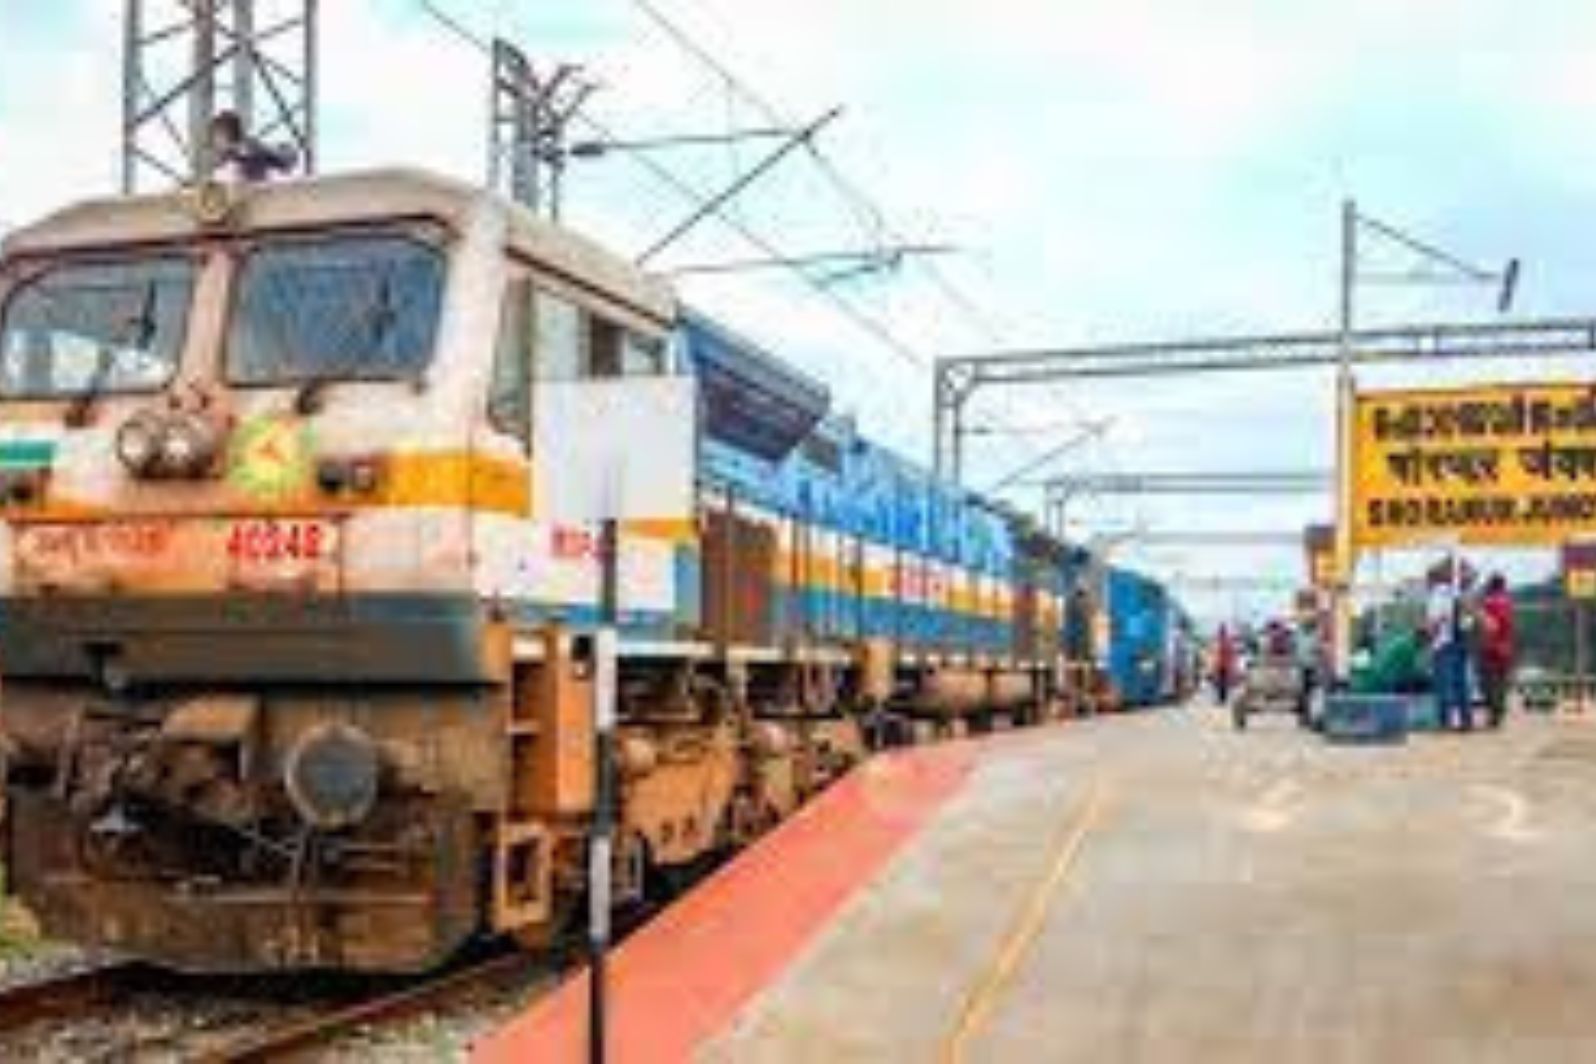 2nd longest railway platform in india